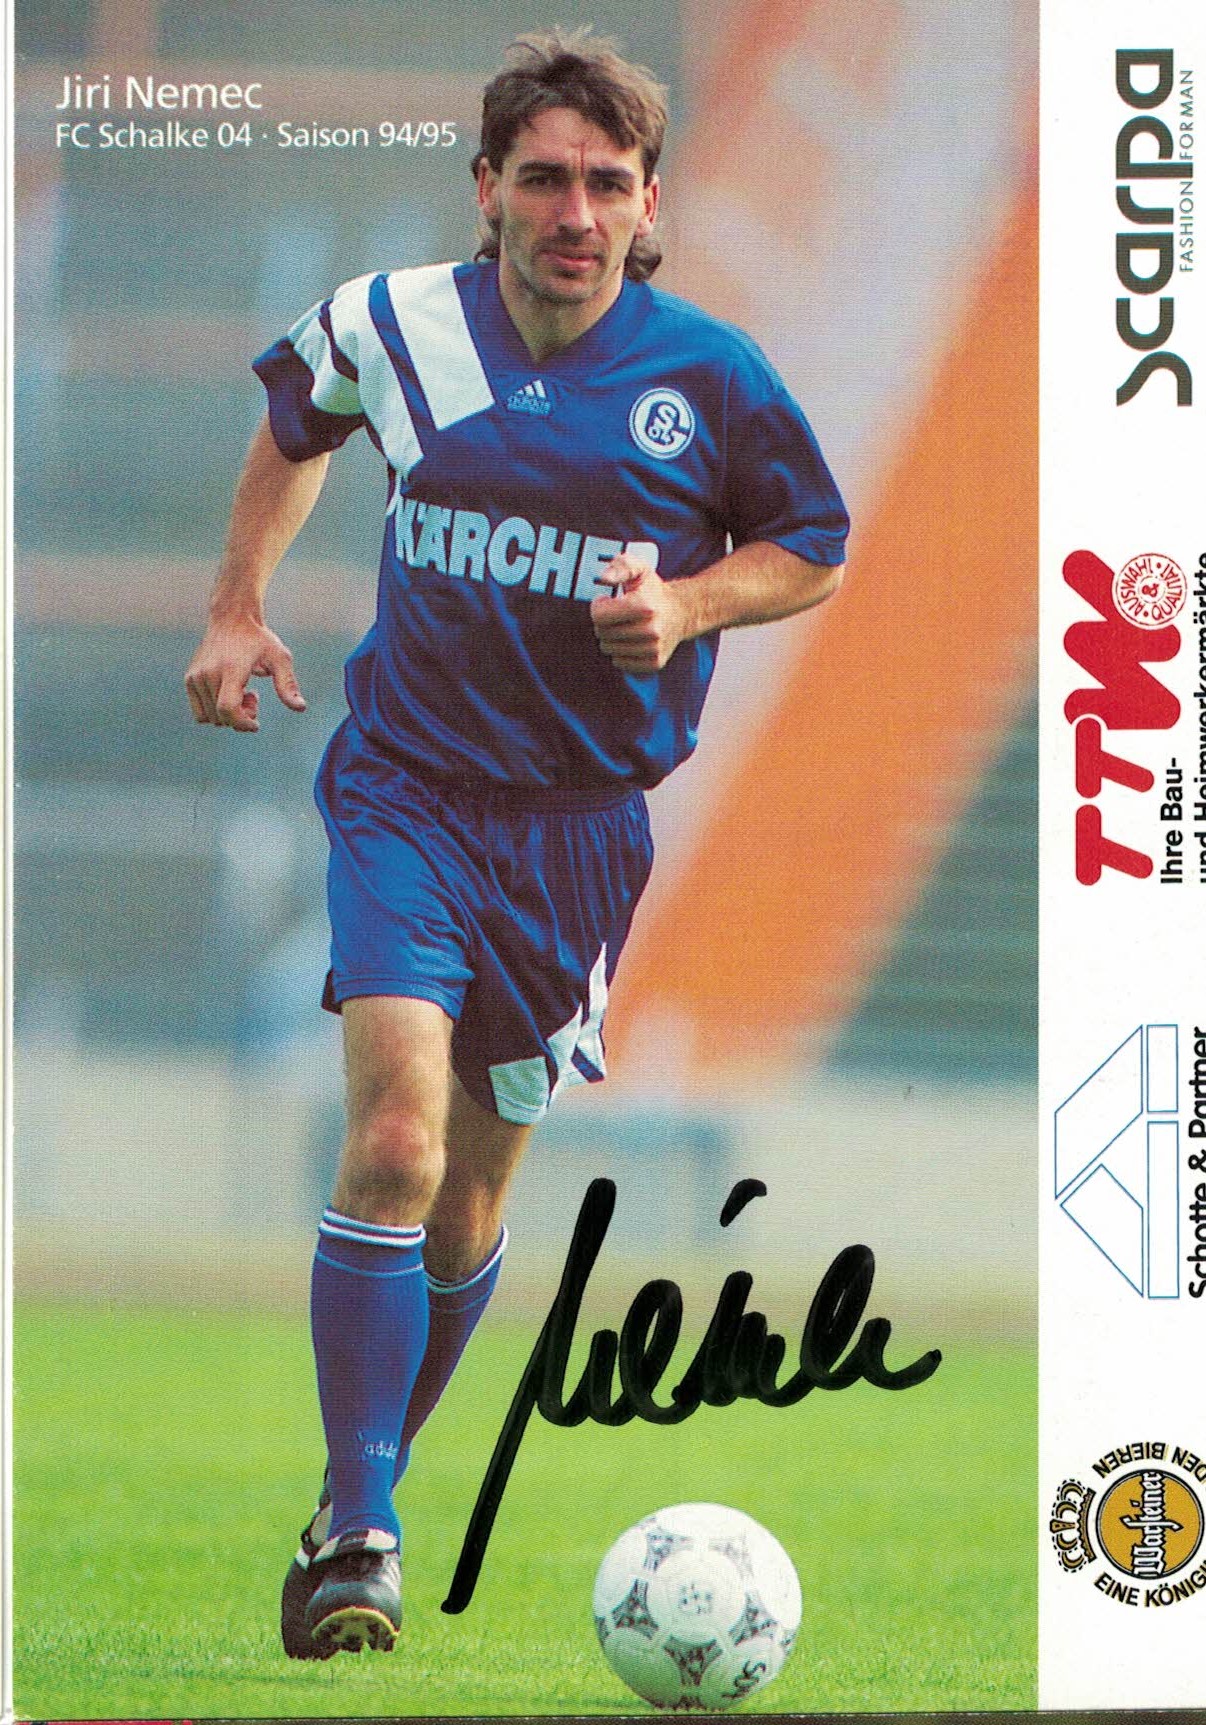 Jiri Nemec Schalke 04 1994/95 Podpisova karta autogram